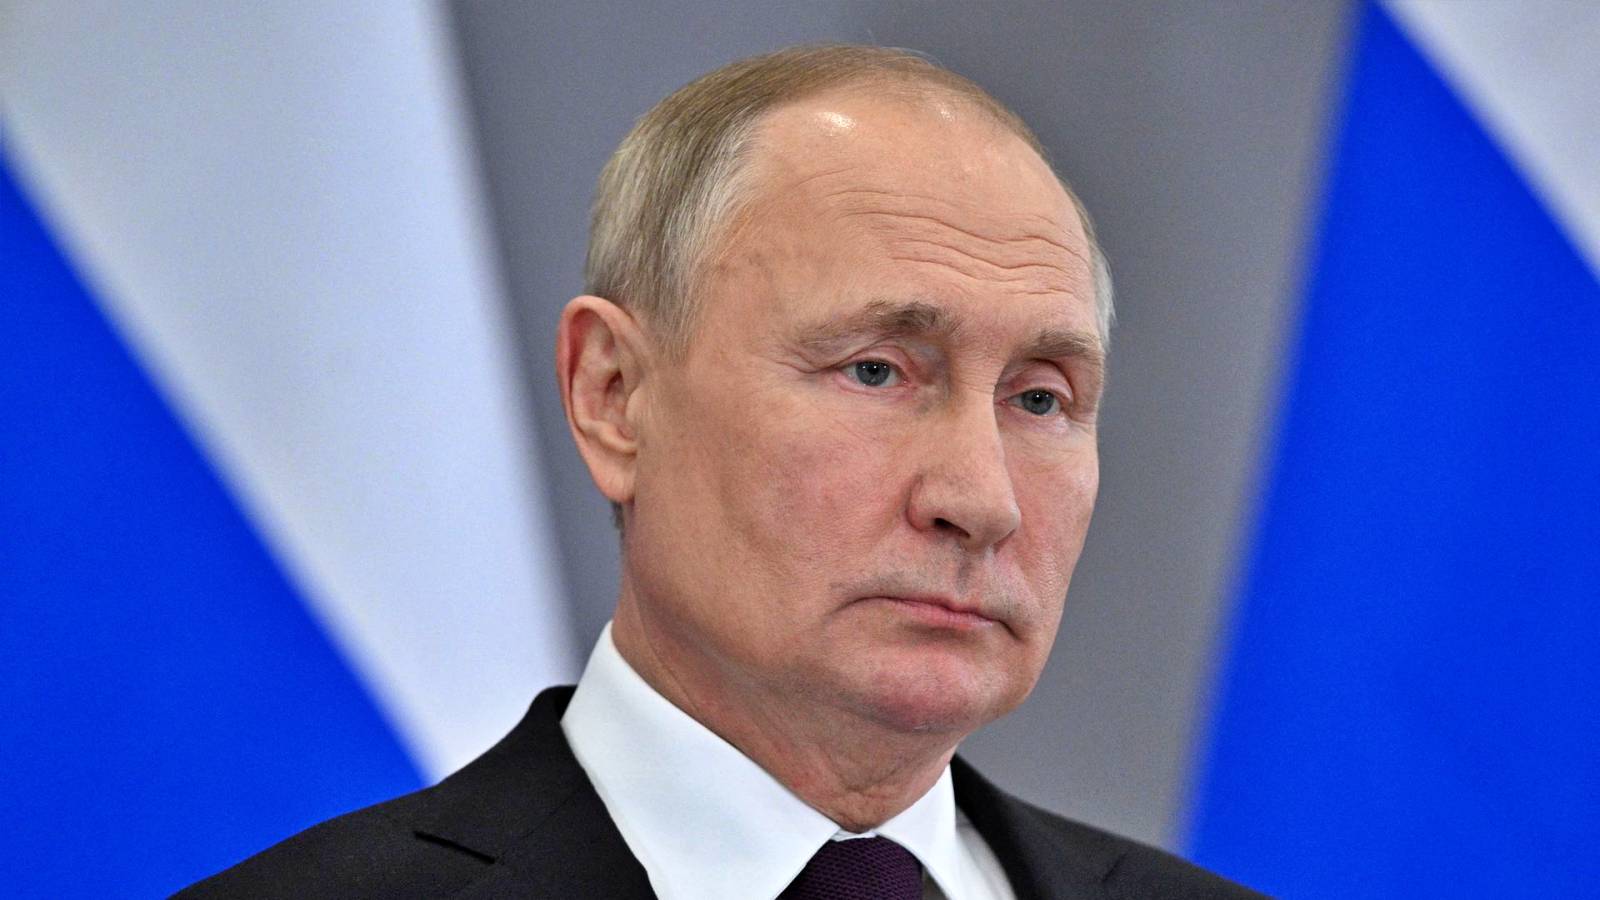 Vladimir Putin ar fi Inceput sa Calatoreasca cu Trenul prin Rusia